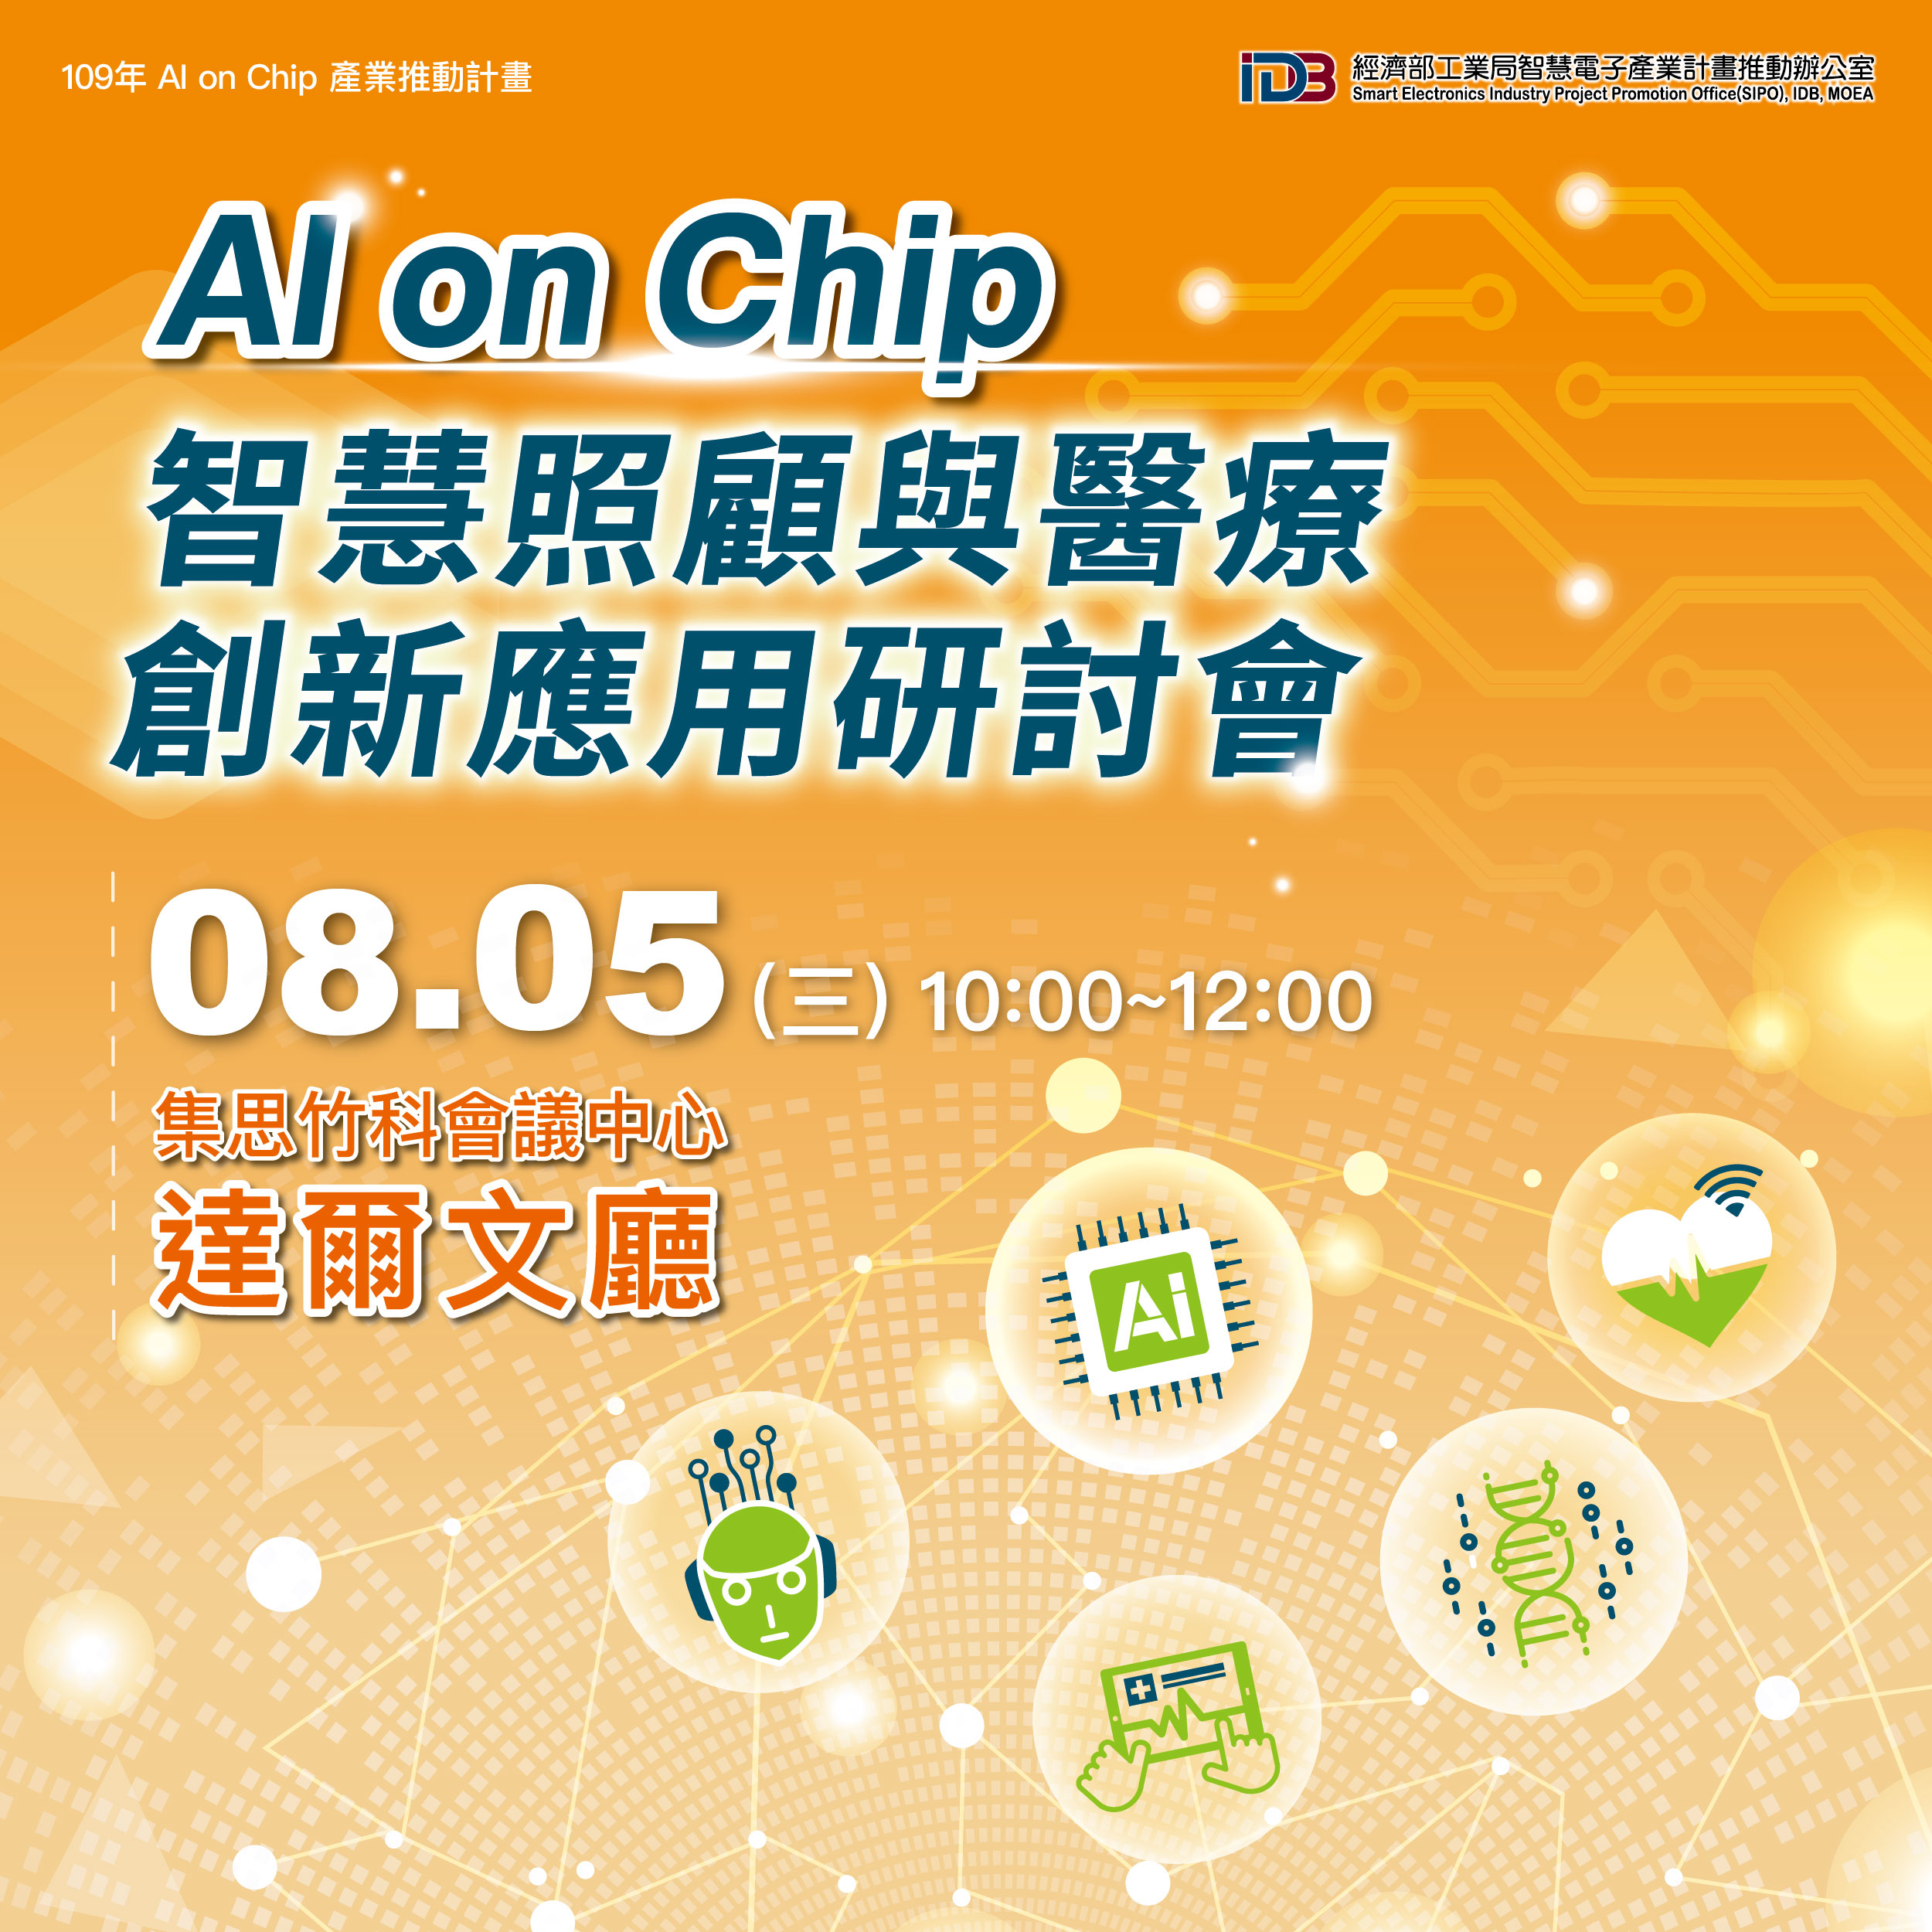 20200805 AI on Chip智慧照顧與醫療創新與應用研討會